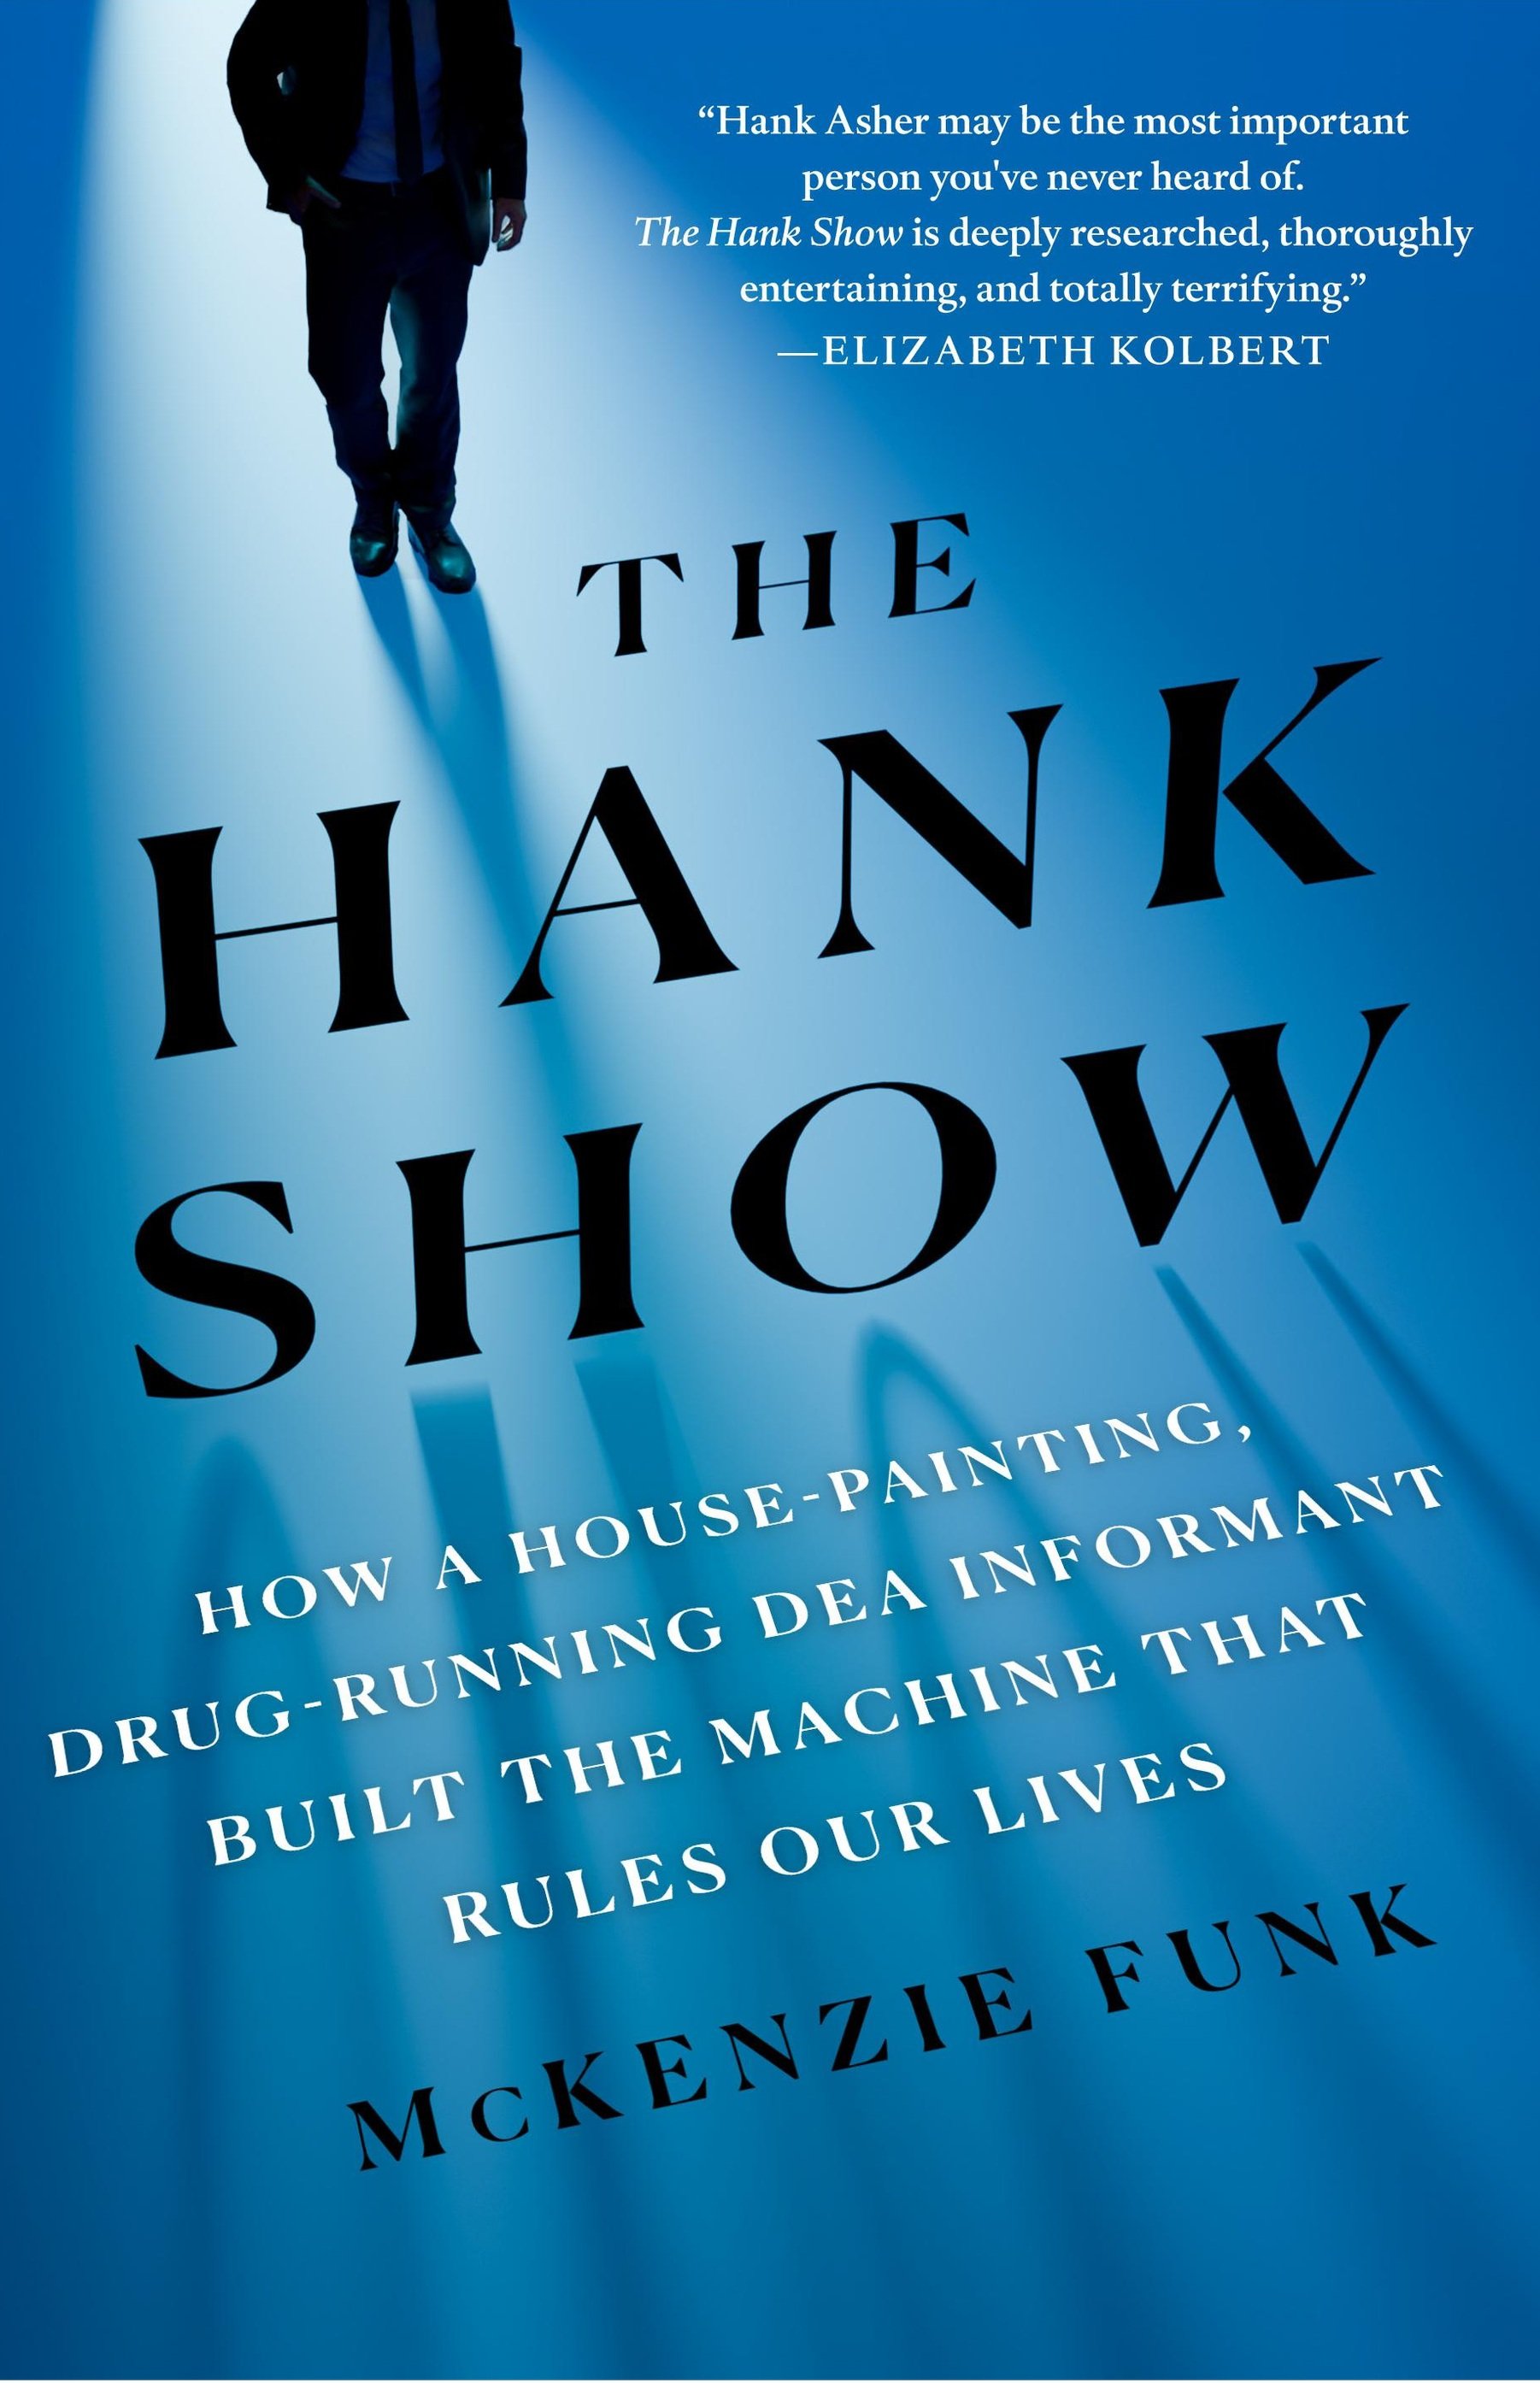 Funk_The+Hank+Show.jpg